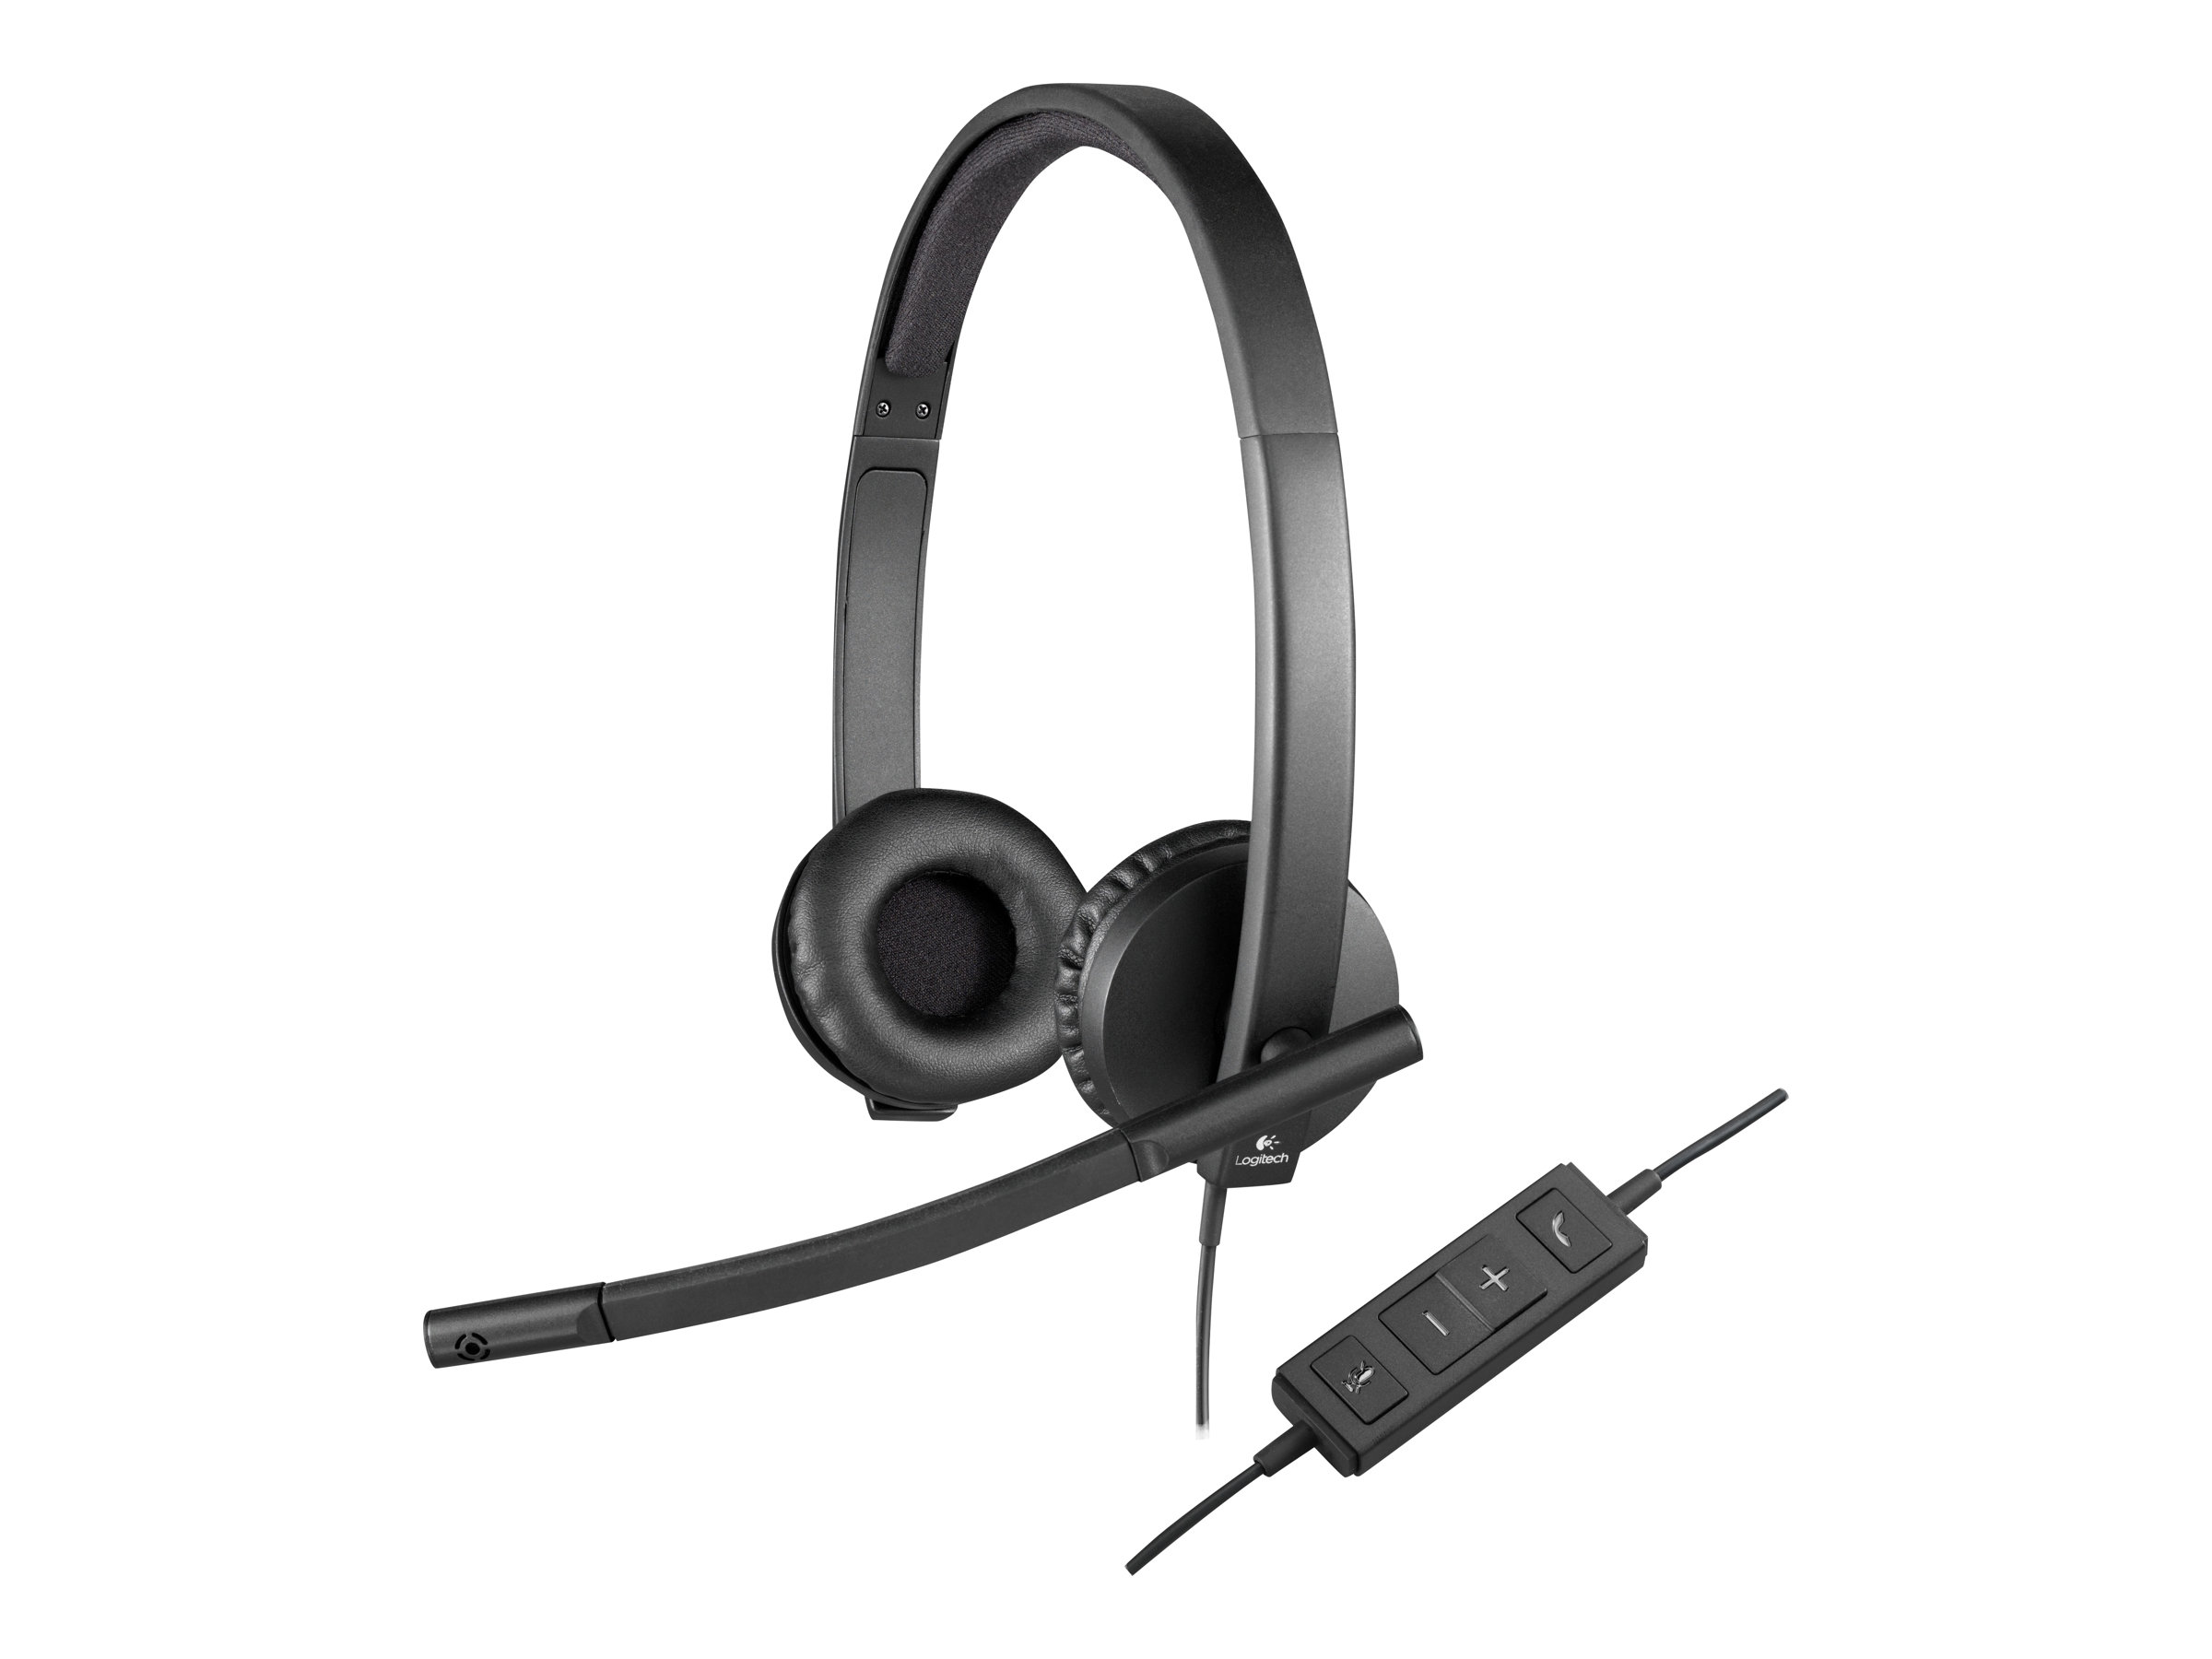 Logitech USB Headset H570e - Headset - On-Ear - kabelgebunden